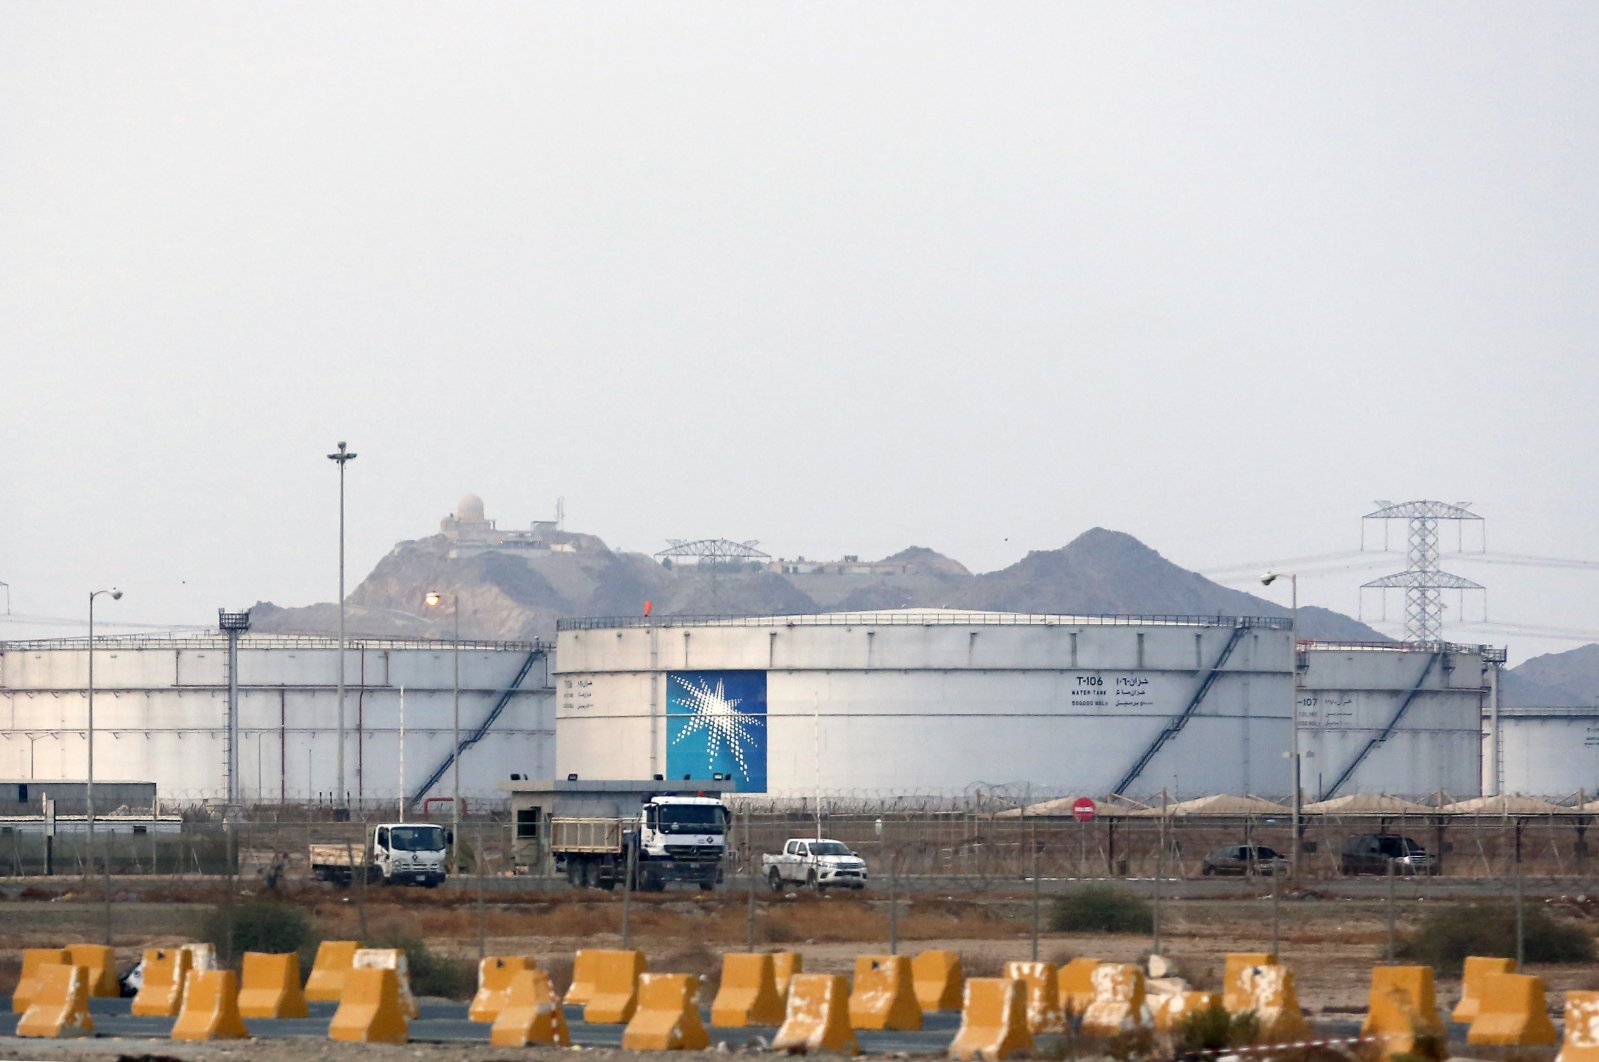 Storage tanks at the North Jiddah bulk plant, an Aramco oil facility, in Jiddah, Saudi Arabia, Sept. 15, 2019. (AP Photo)